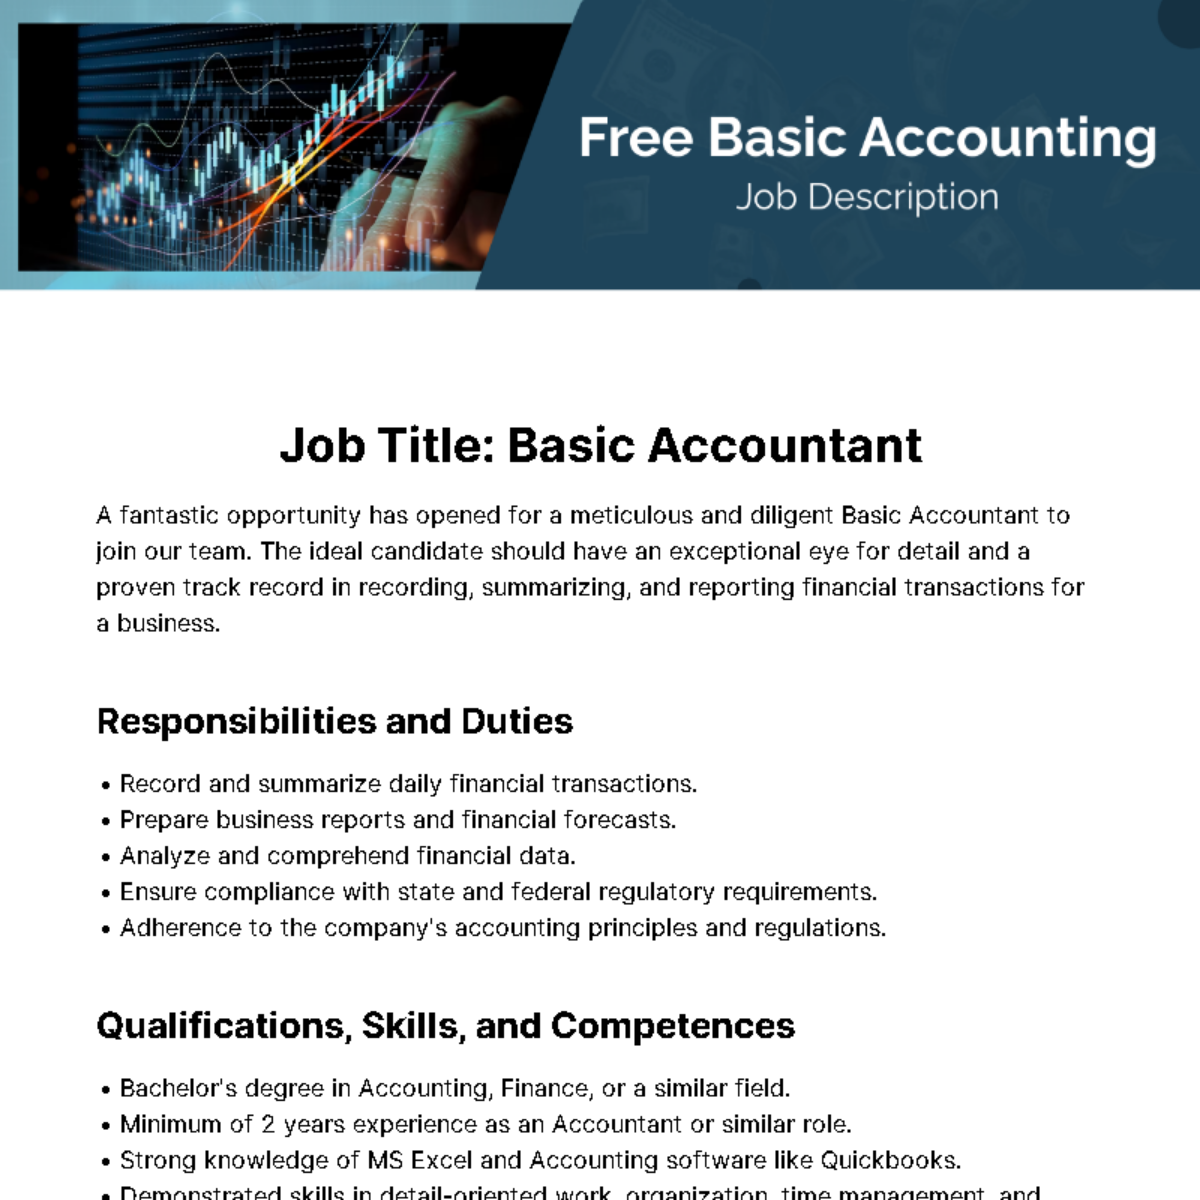 Basic Accounting Job Description Template